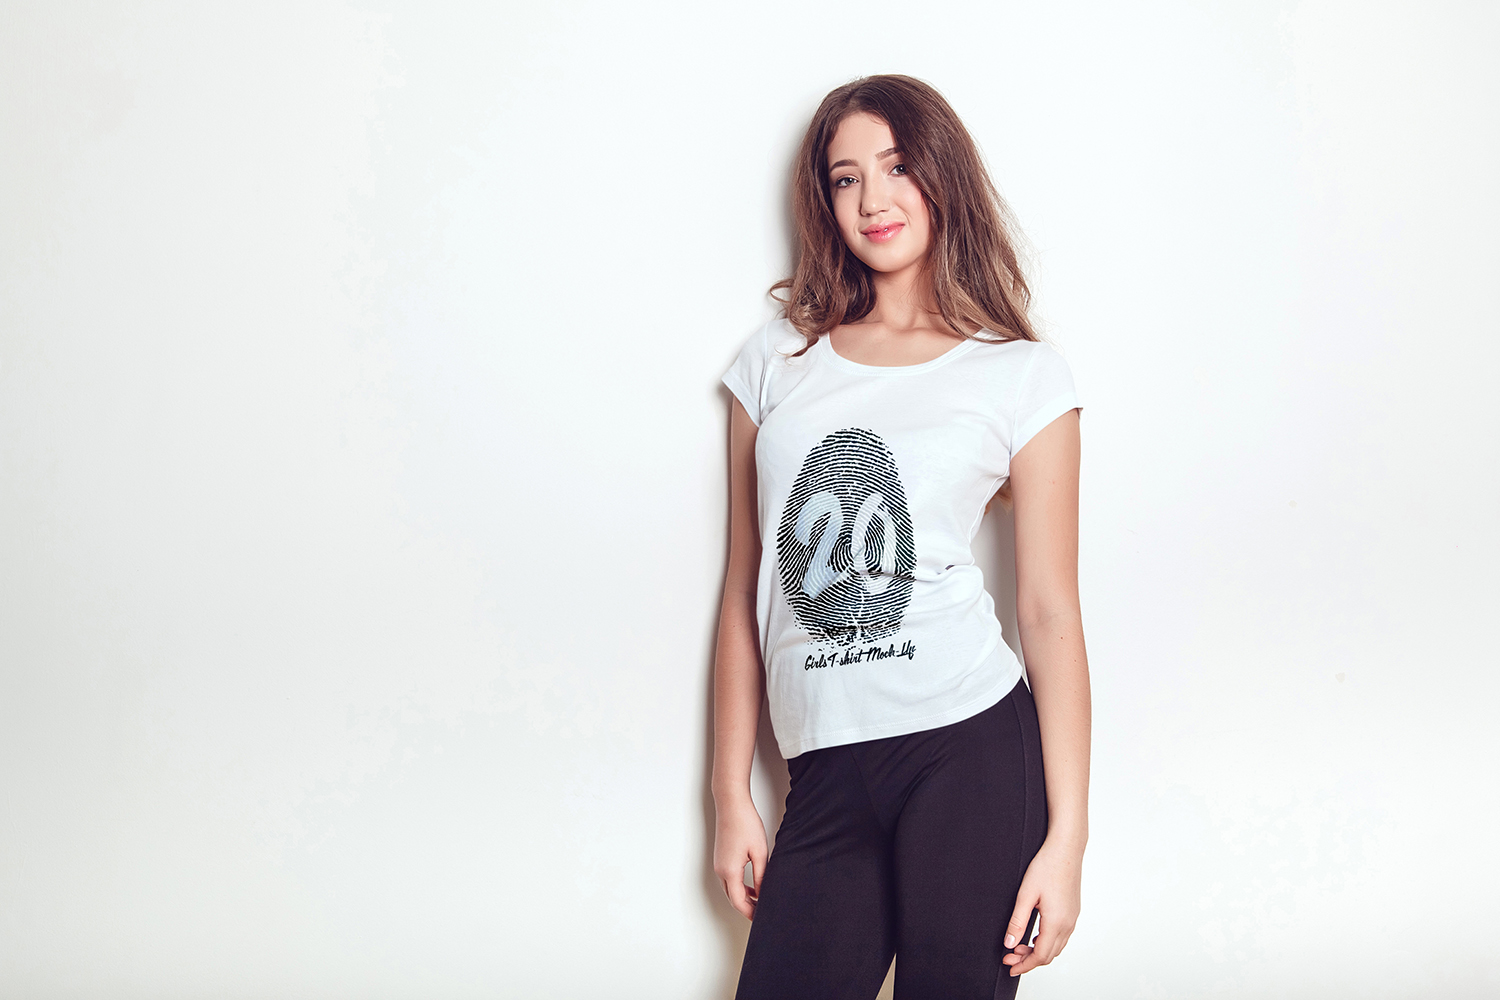 Download 20 Top Girls T-Shirt Mock-Up